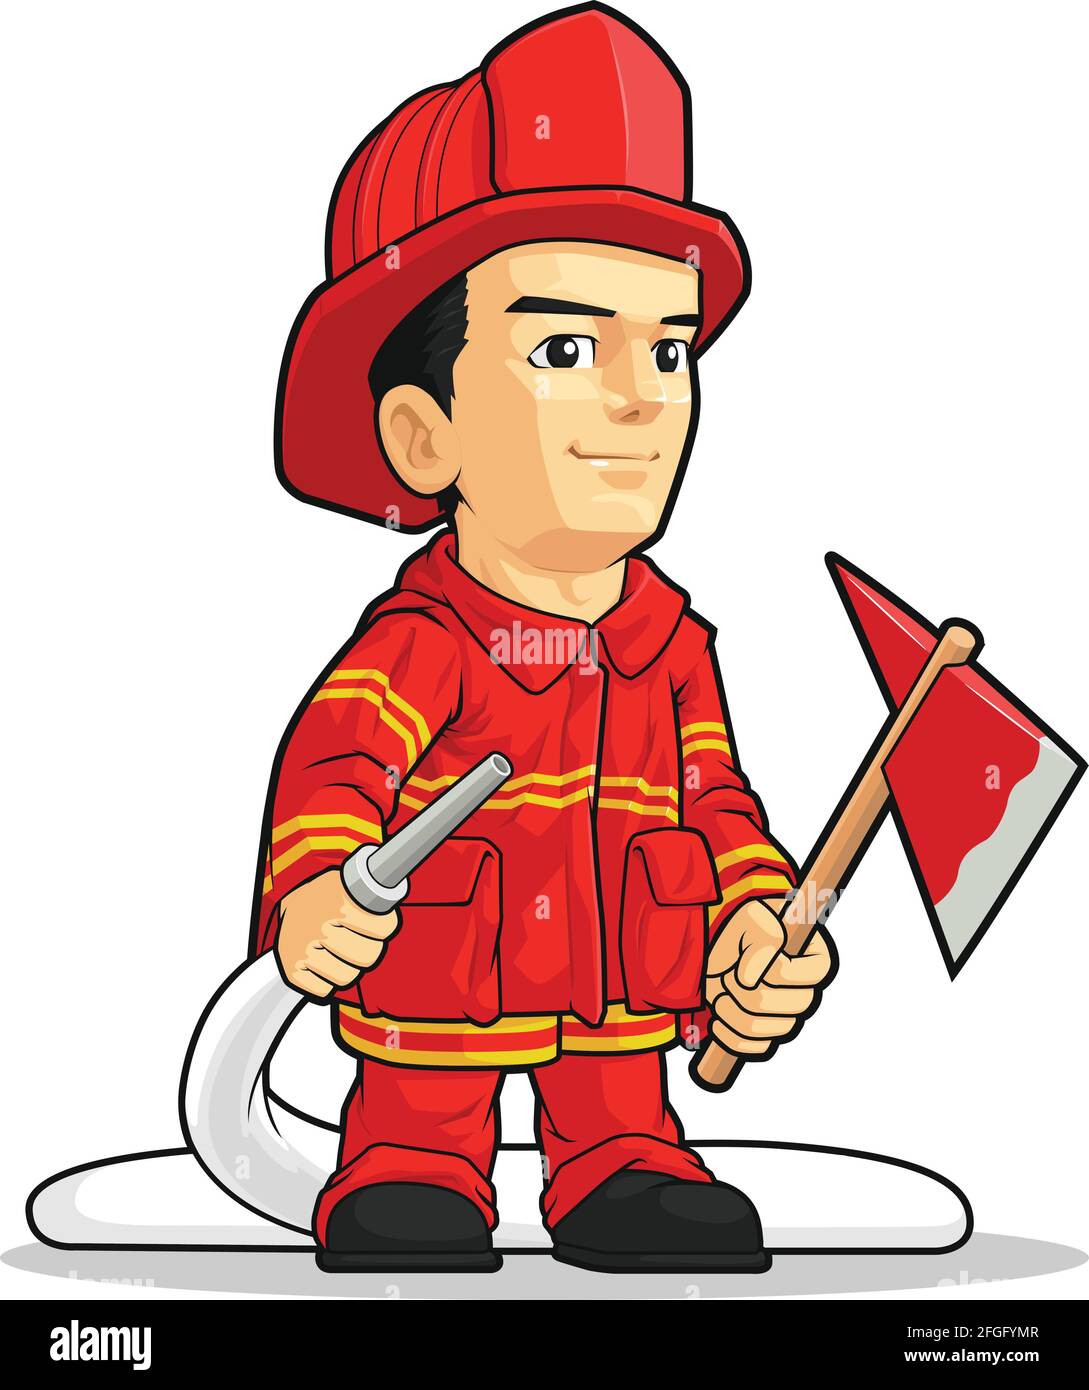 Feu Fighter Fireman Smoke Eater Cartoon Mascot Illustration Illustration de Vecteur